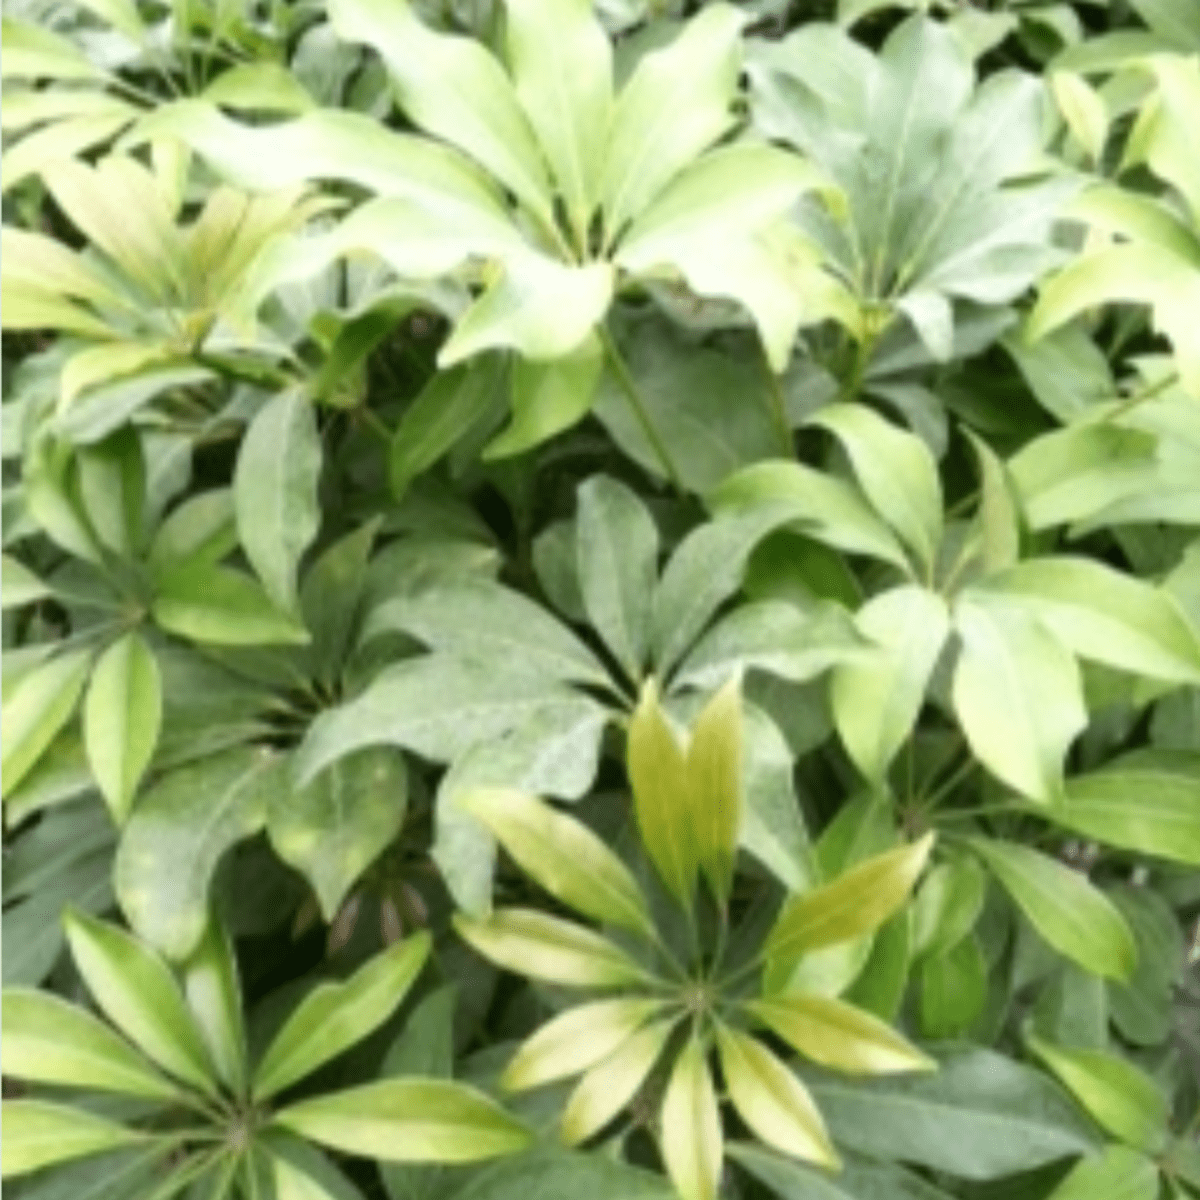 Caring For Schefflera Aka Umbrella Plant Arboricola Amate Dengarden